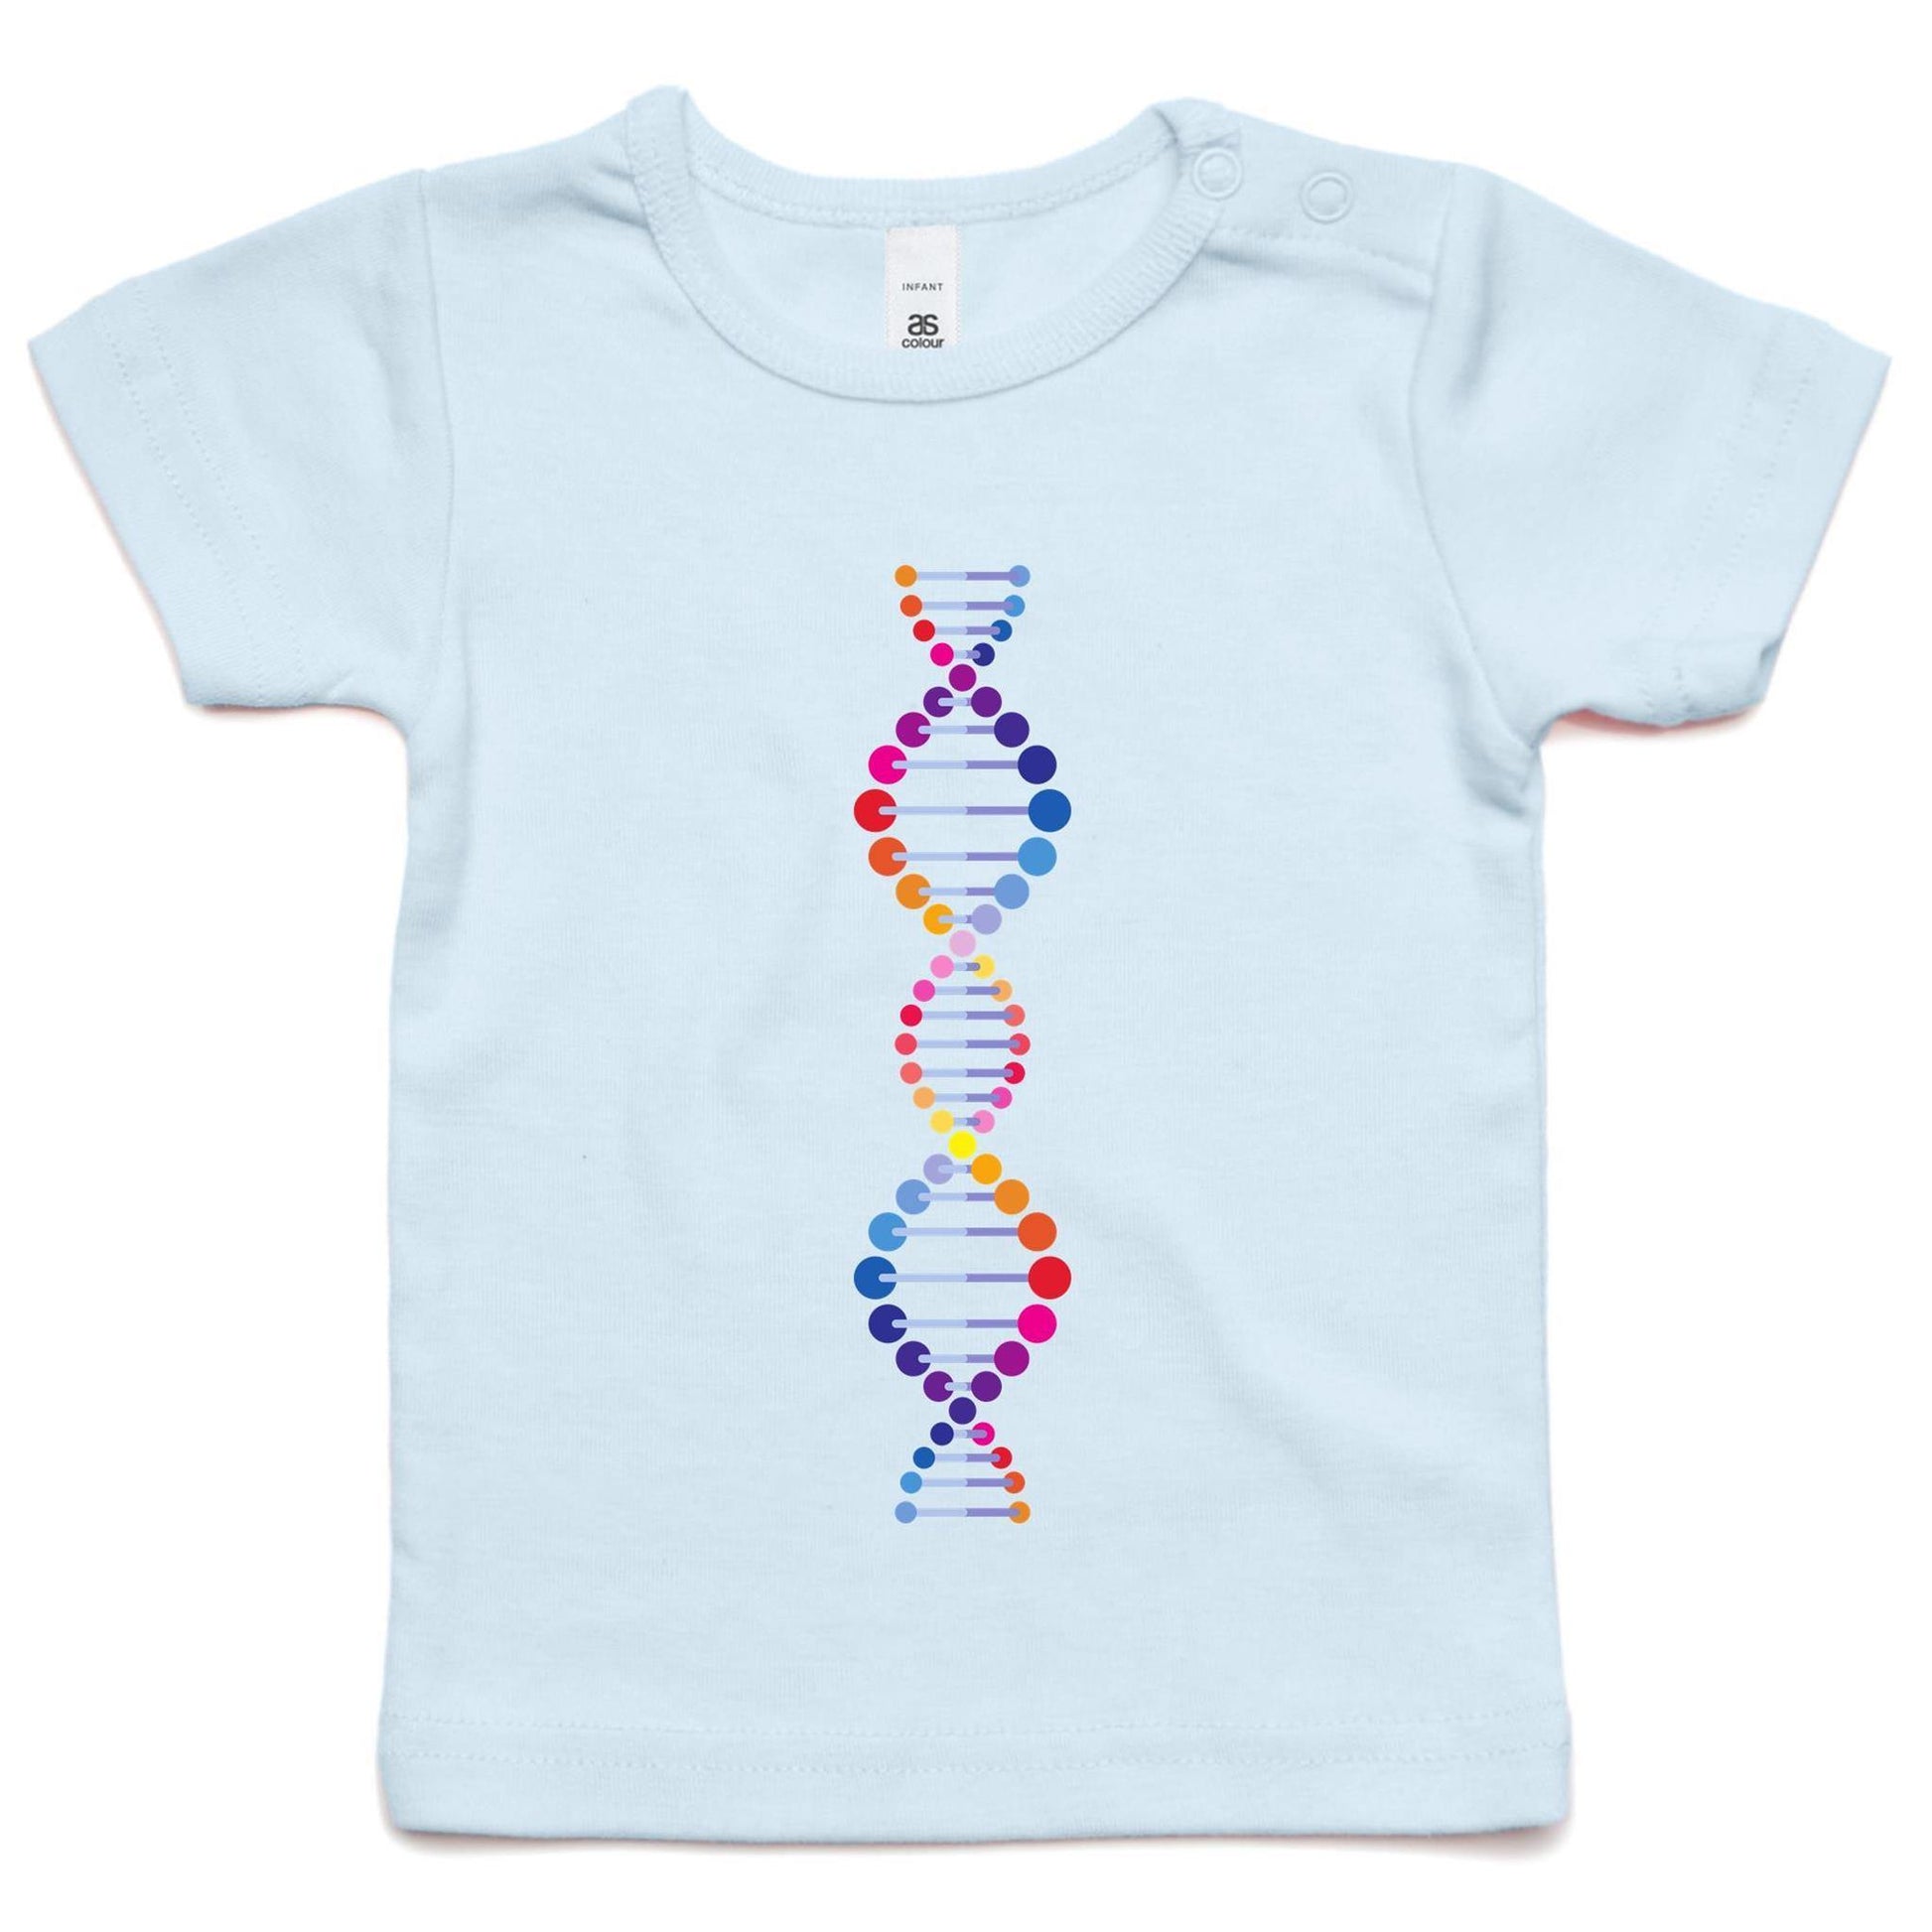 DNA - Baby T-shirt Powder Blue Baby T-shirt kids Science